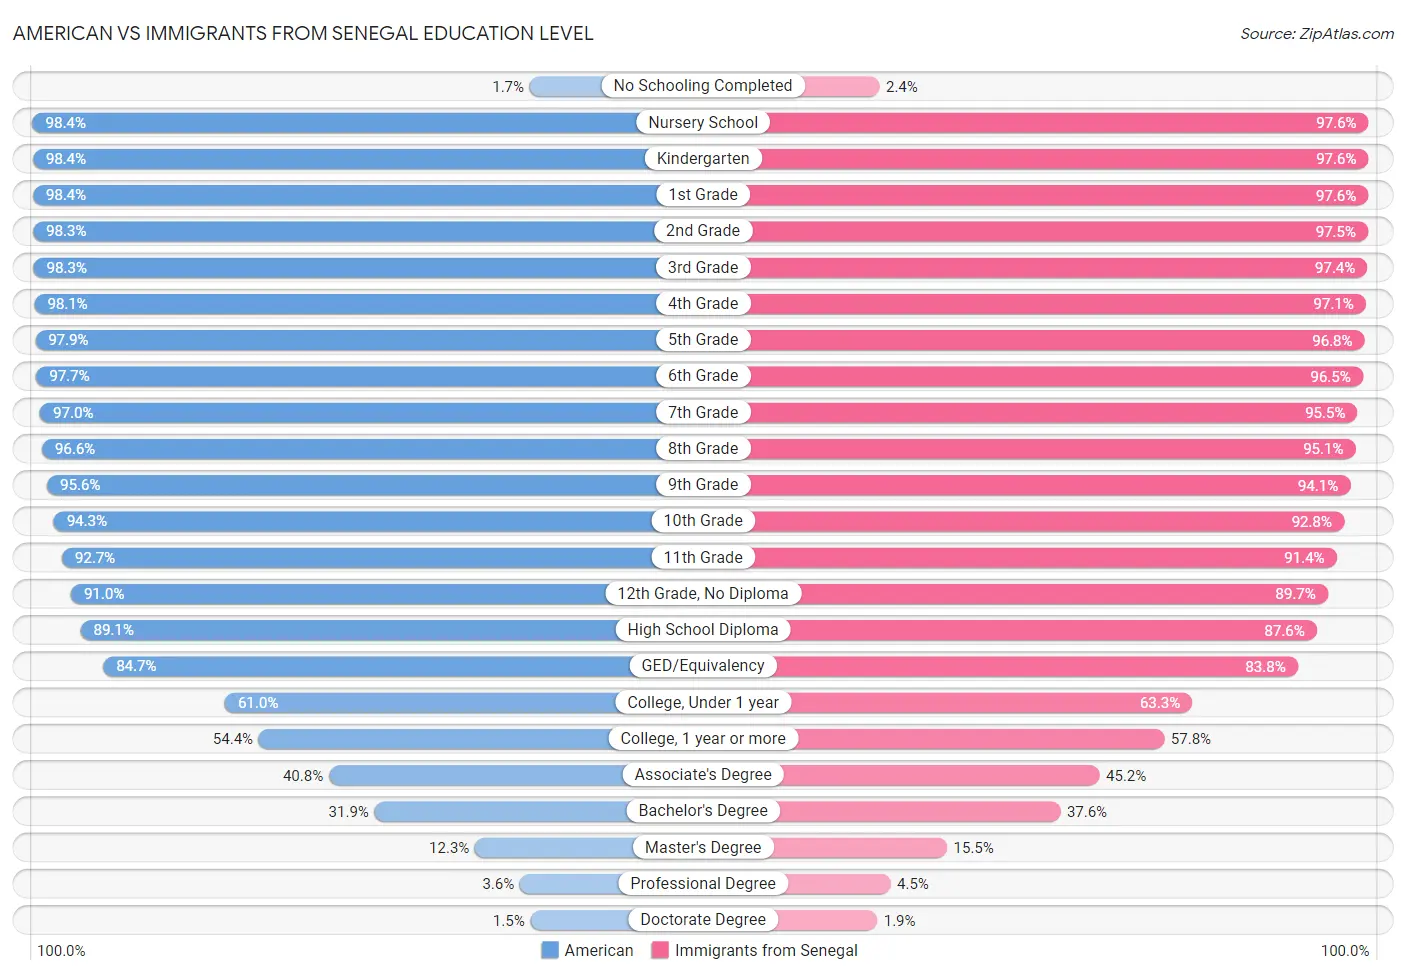 American vs Immigrants from Senegal Education Level